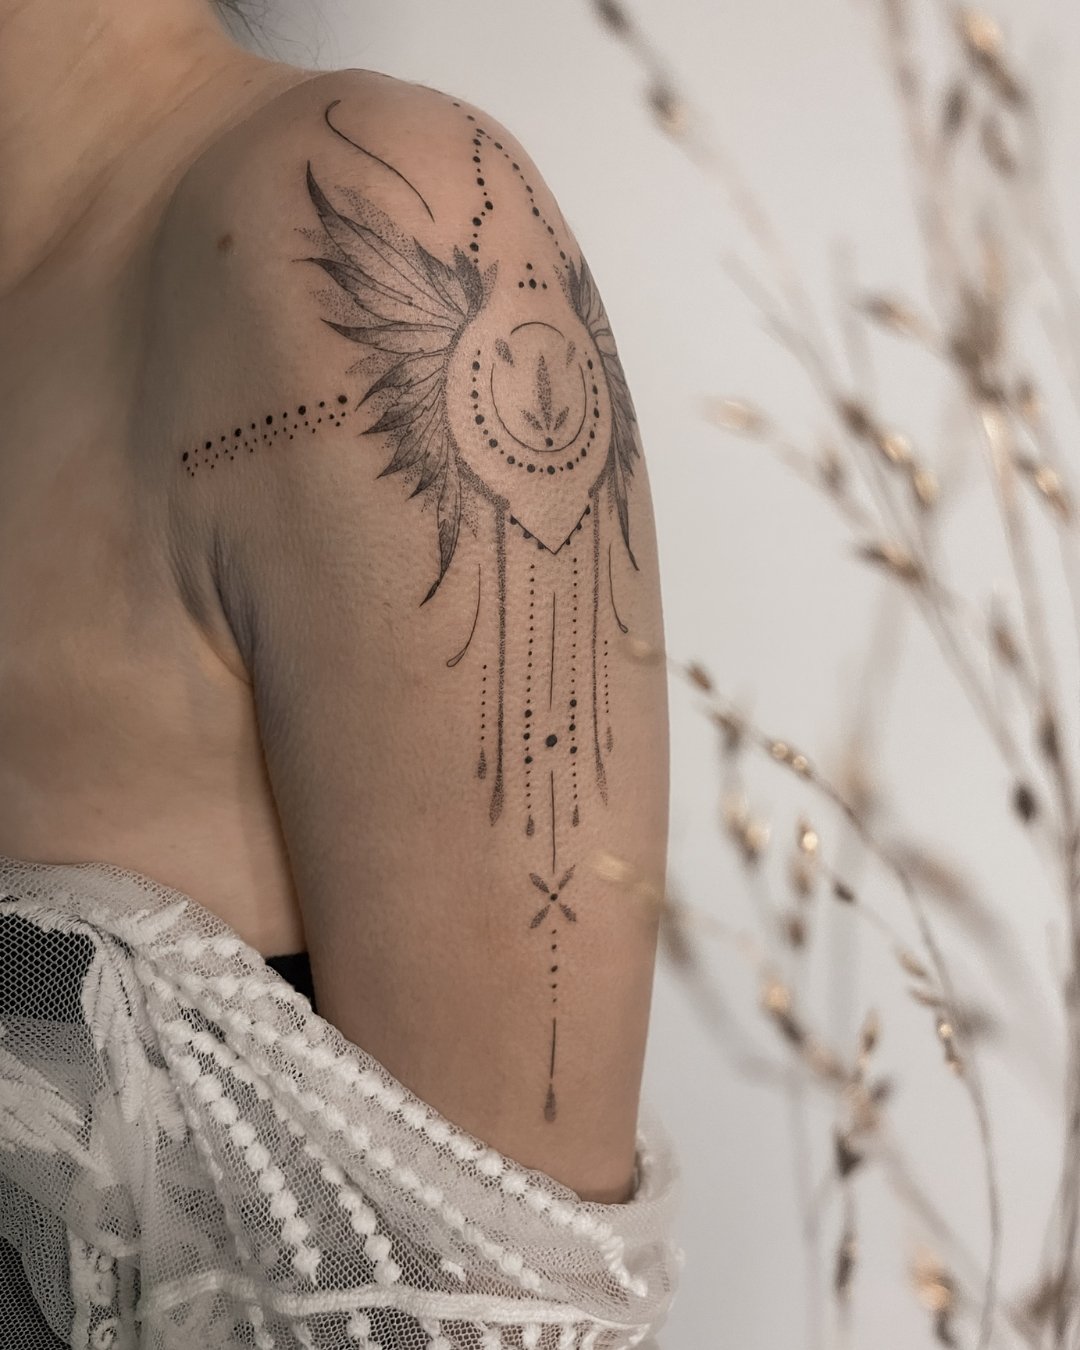 Inspiration valkyrie avec des ornements ✨
@vulpera_ 🫶🏼
&bull;
&bull;
&bull;
#tattoo #tatouage #valkyrie #ornementaltattoo #vulpera #ornament #lyontattoo